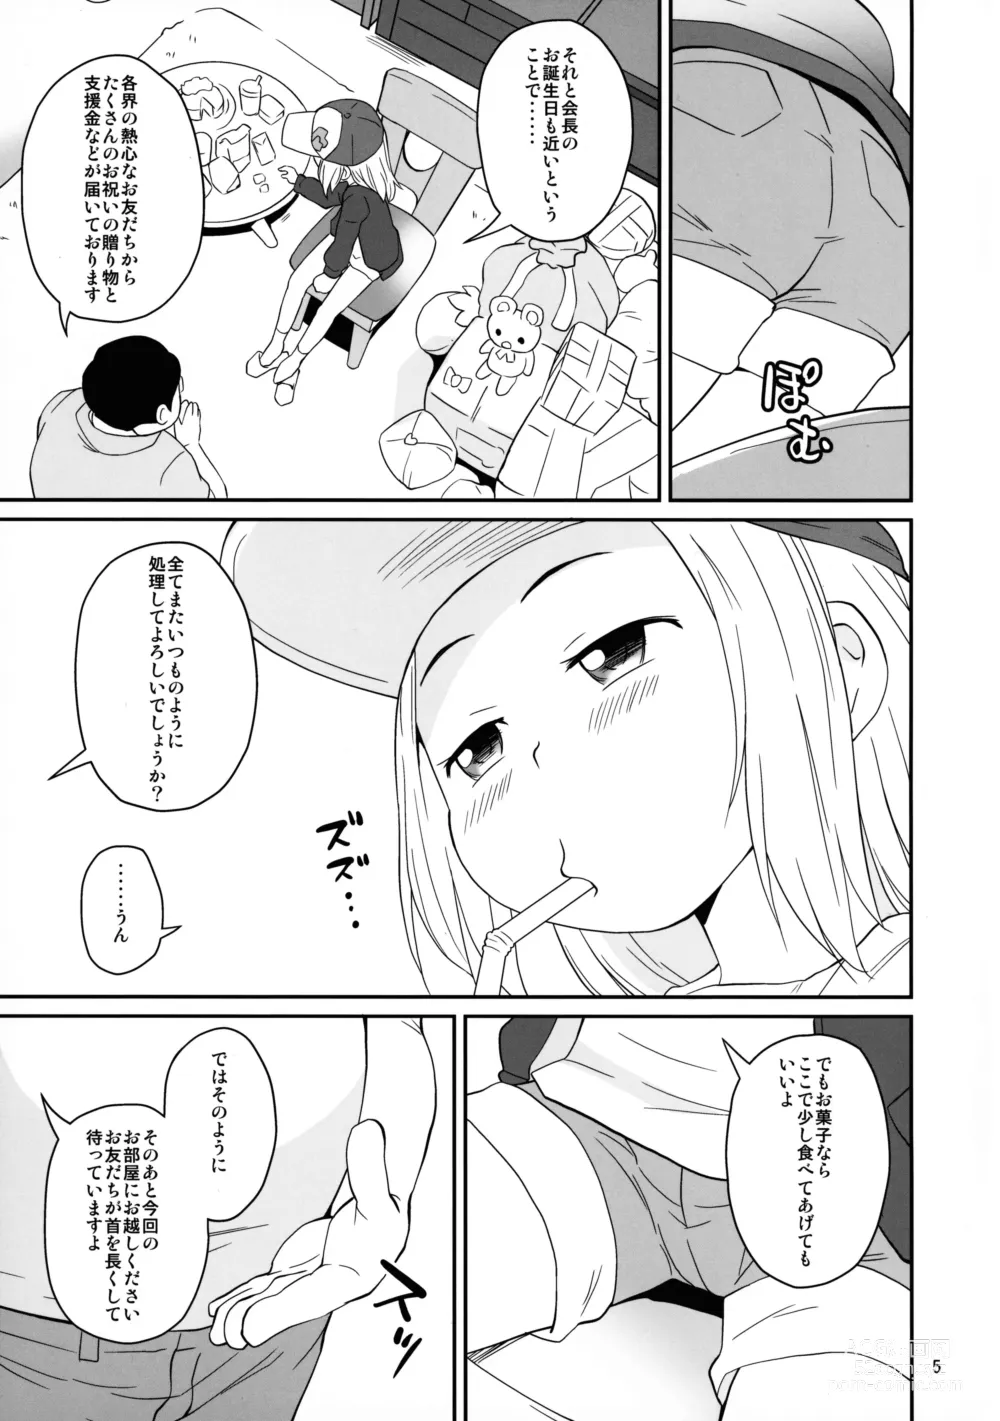 Page 5 of doujinshi Otomodachi Kai